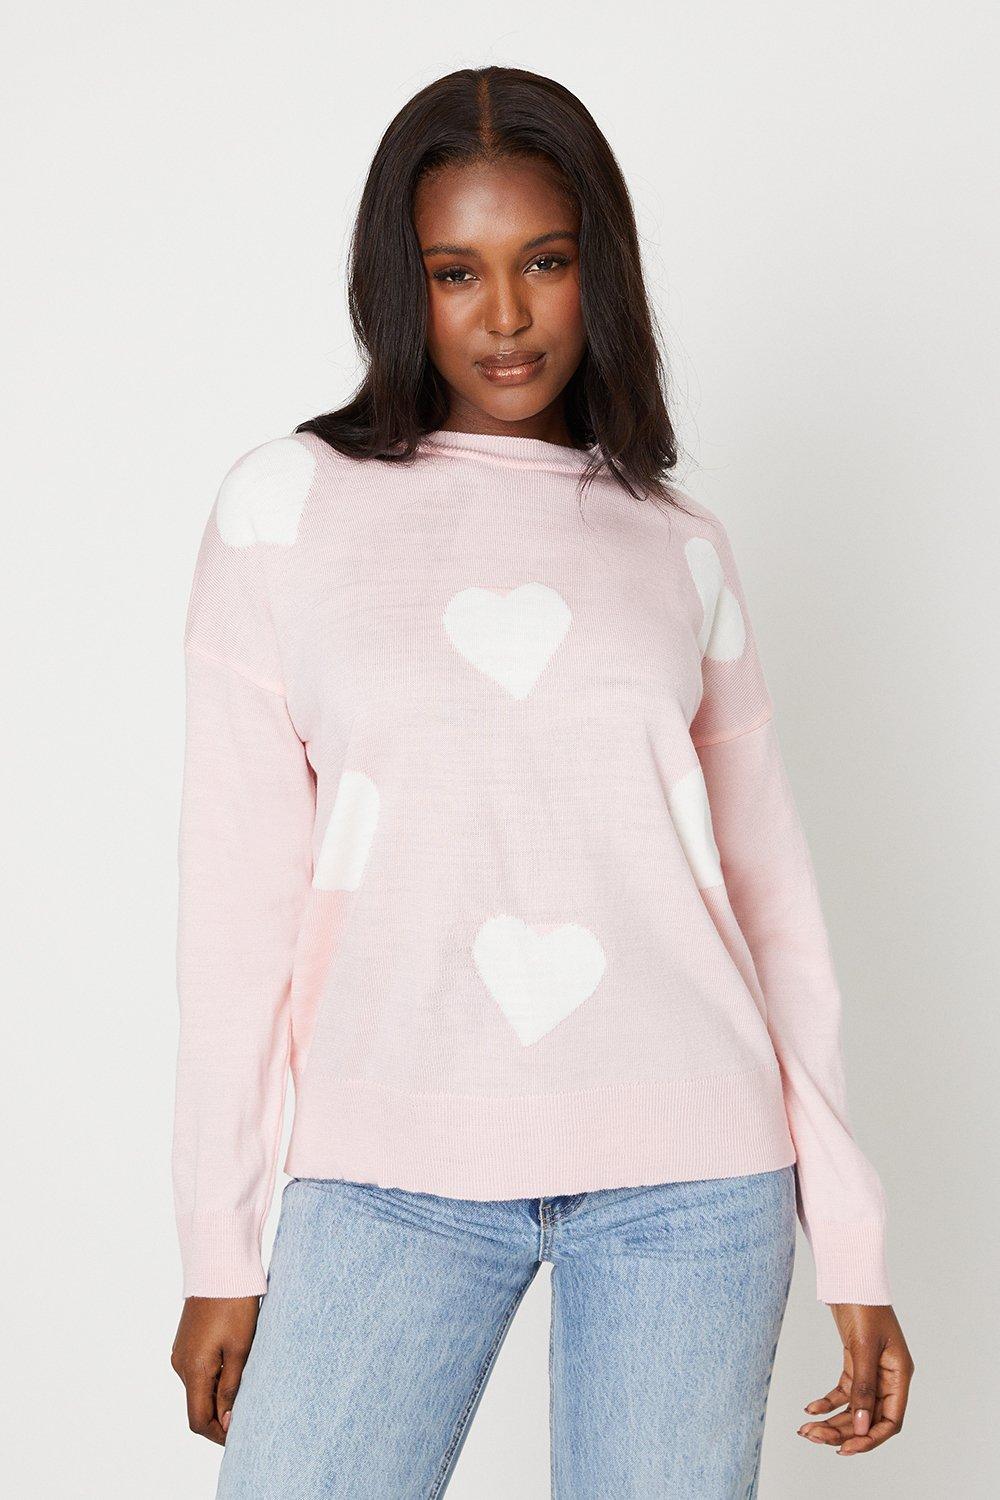 Women’s Crew Neck All Over Heart Print Knitted Jumper - blush - S